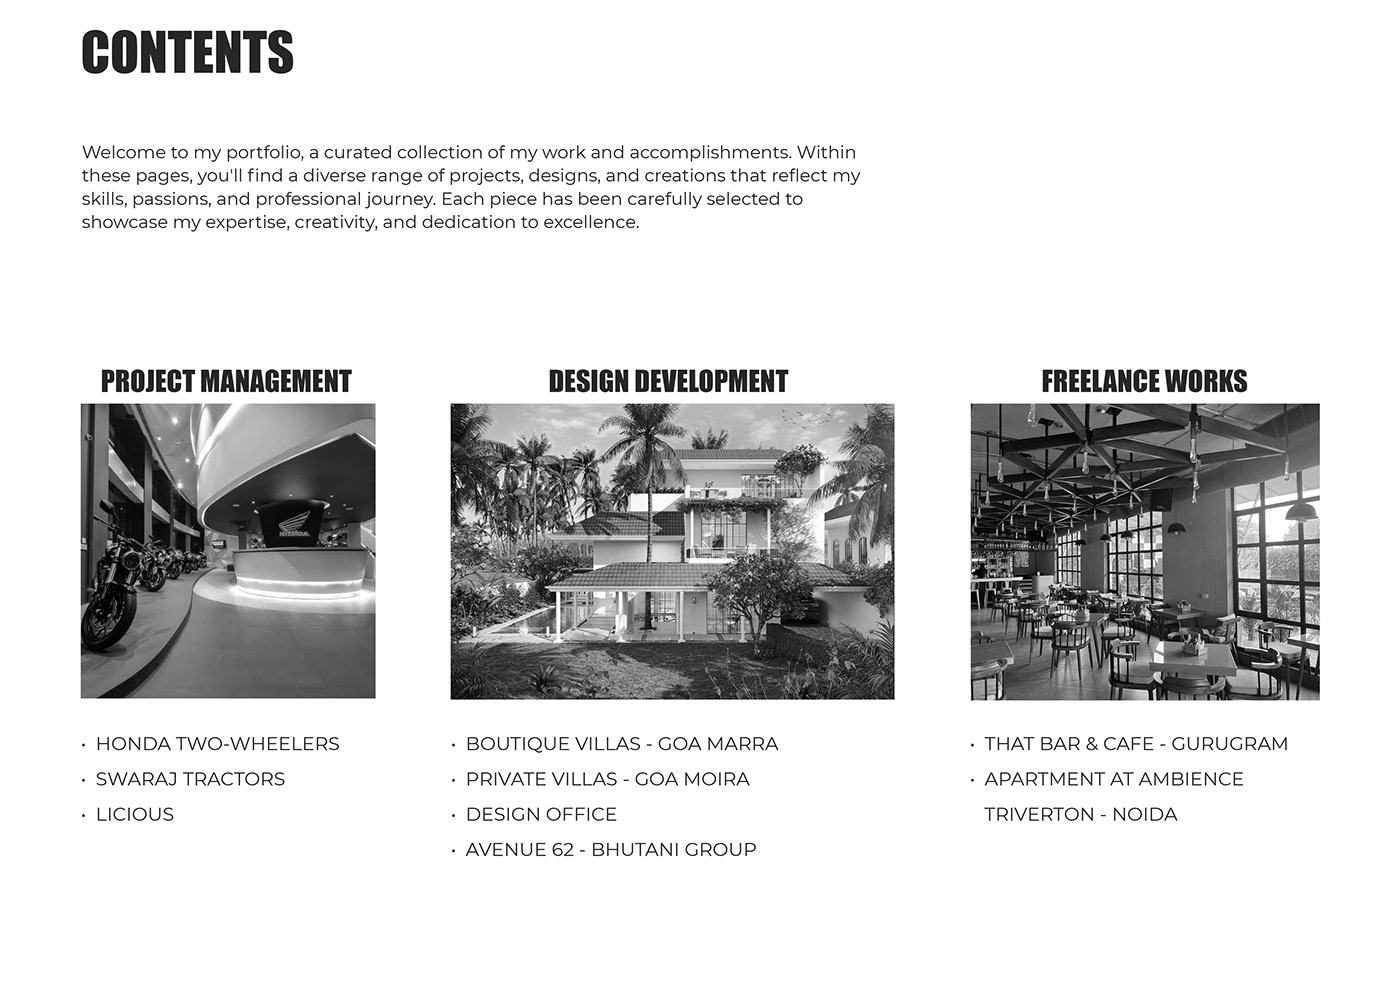 architecture architect design visual identity Render visualization interior design  exterior modern